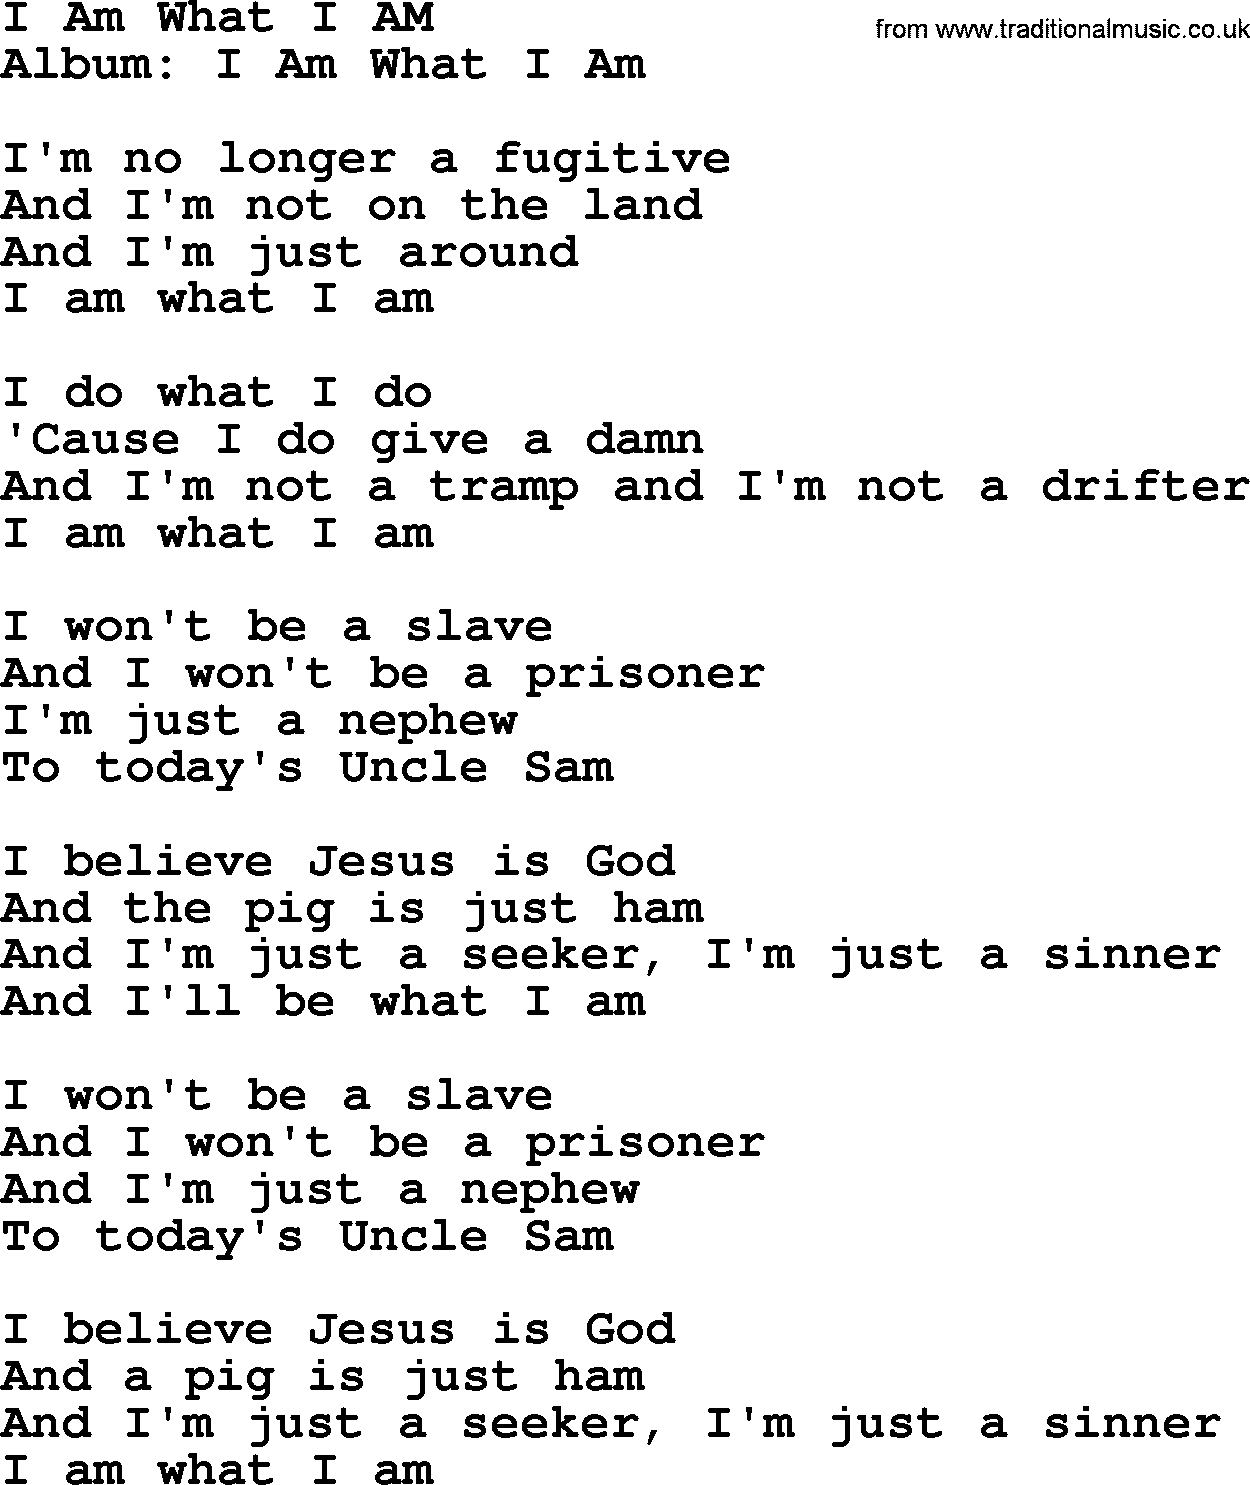 Merle Haggard song: I Am What I Am, lyrics.